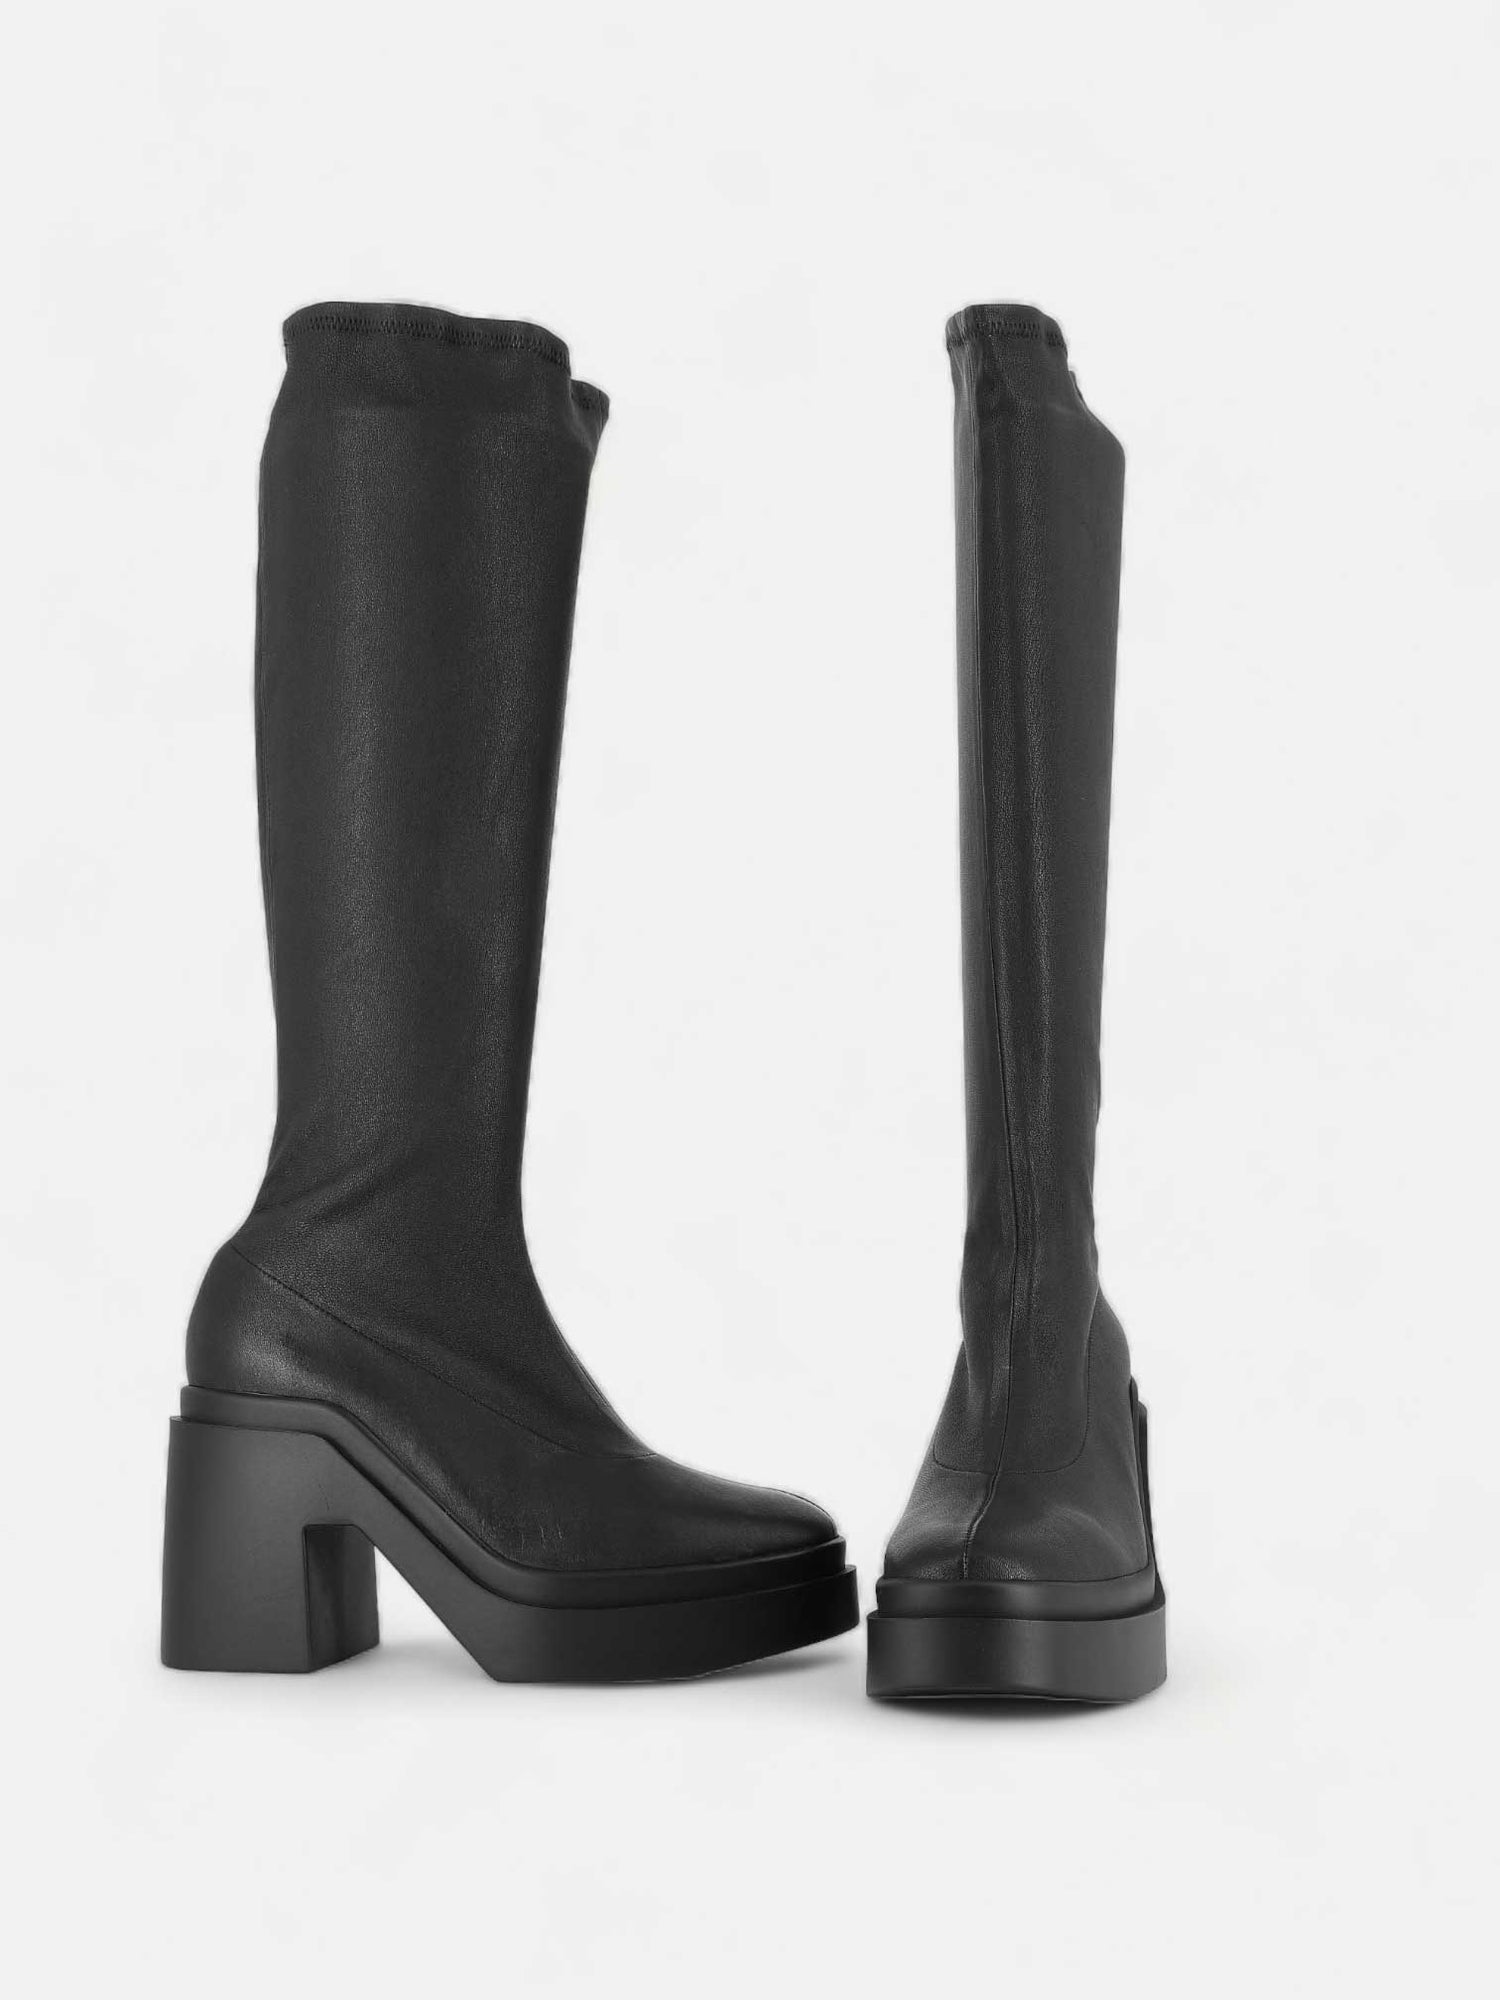 HIGH BOOTS - NALINI boots, stretch lambskin black - 3606063817714 - Clergerie Paris - Europe